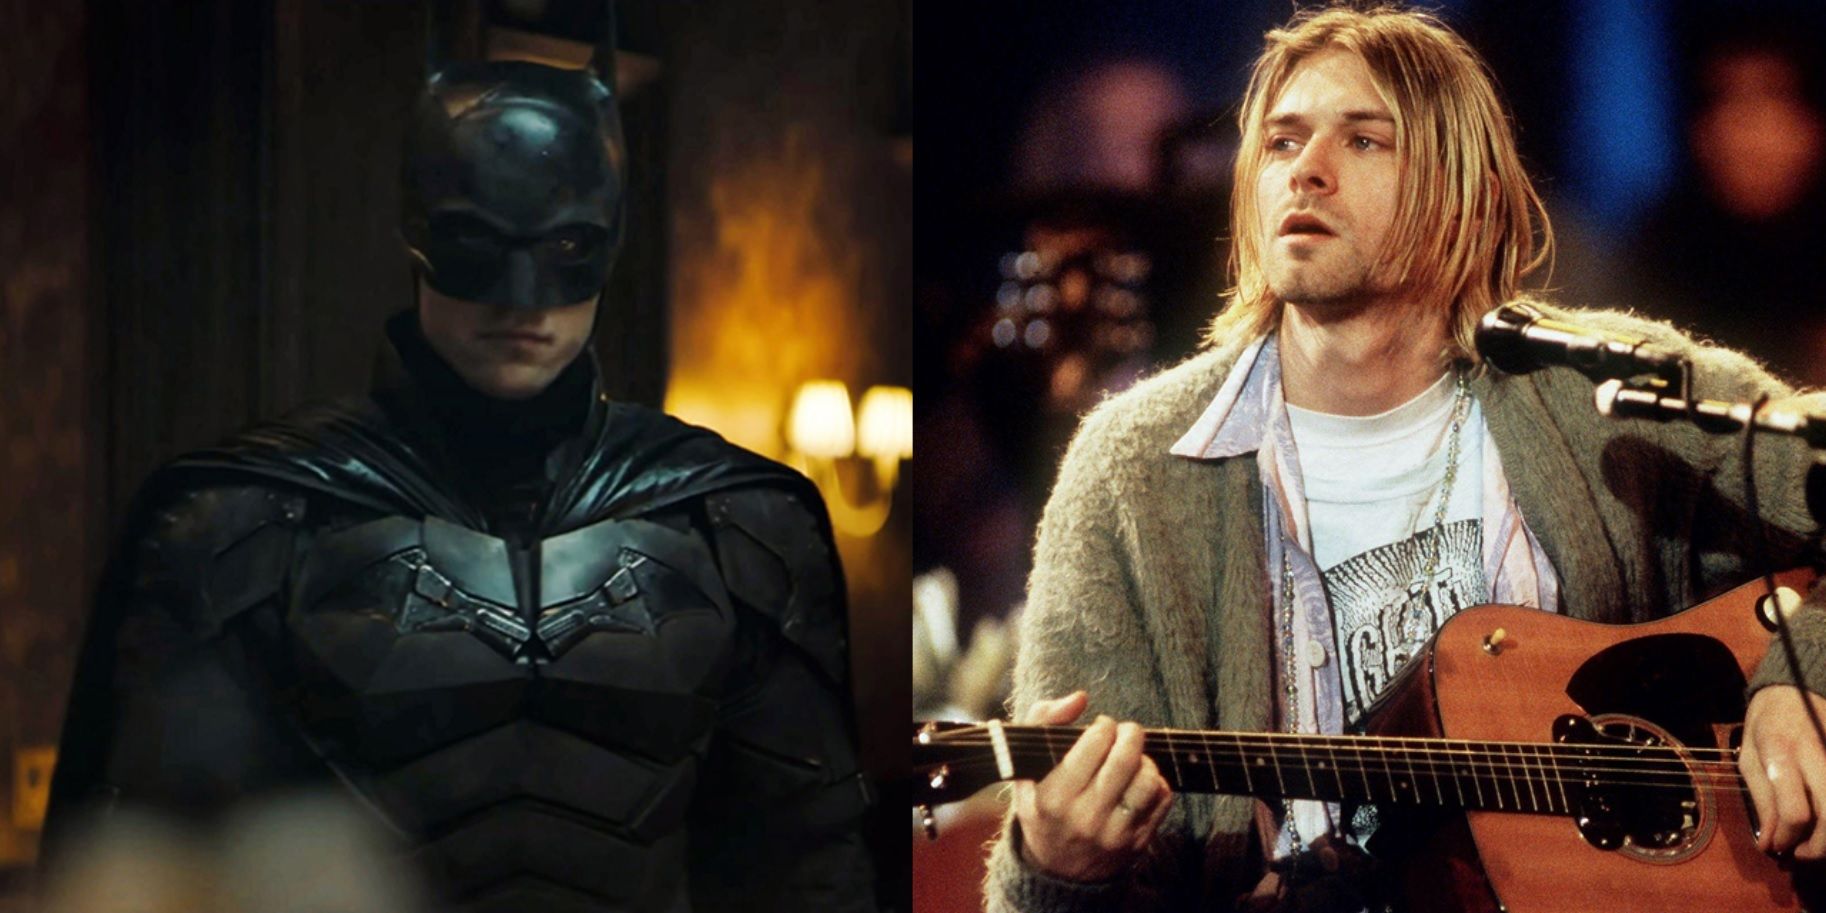 Split image of Robert Pattinson in The Batman and Kurt Cobain playing a guitar